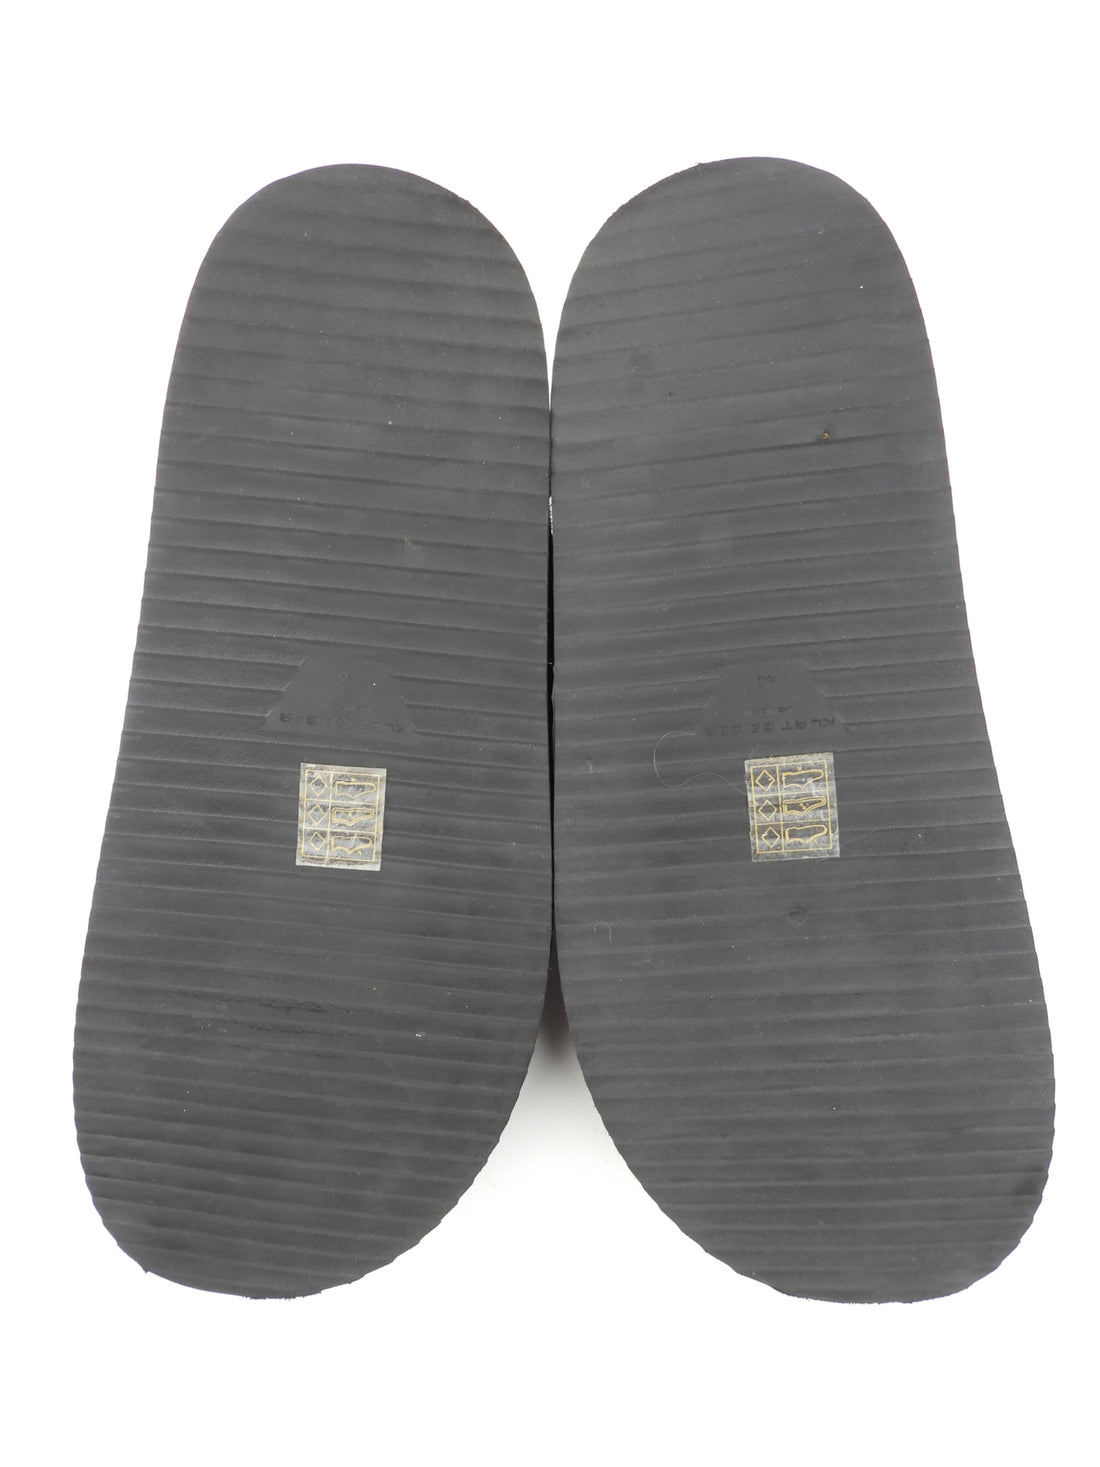 Kurt Geiger London Black Vegan Leather Quilted Orson Platform Sandals - 40